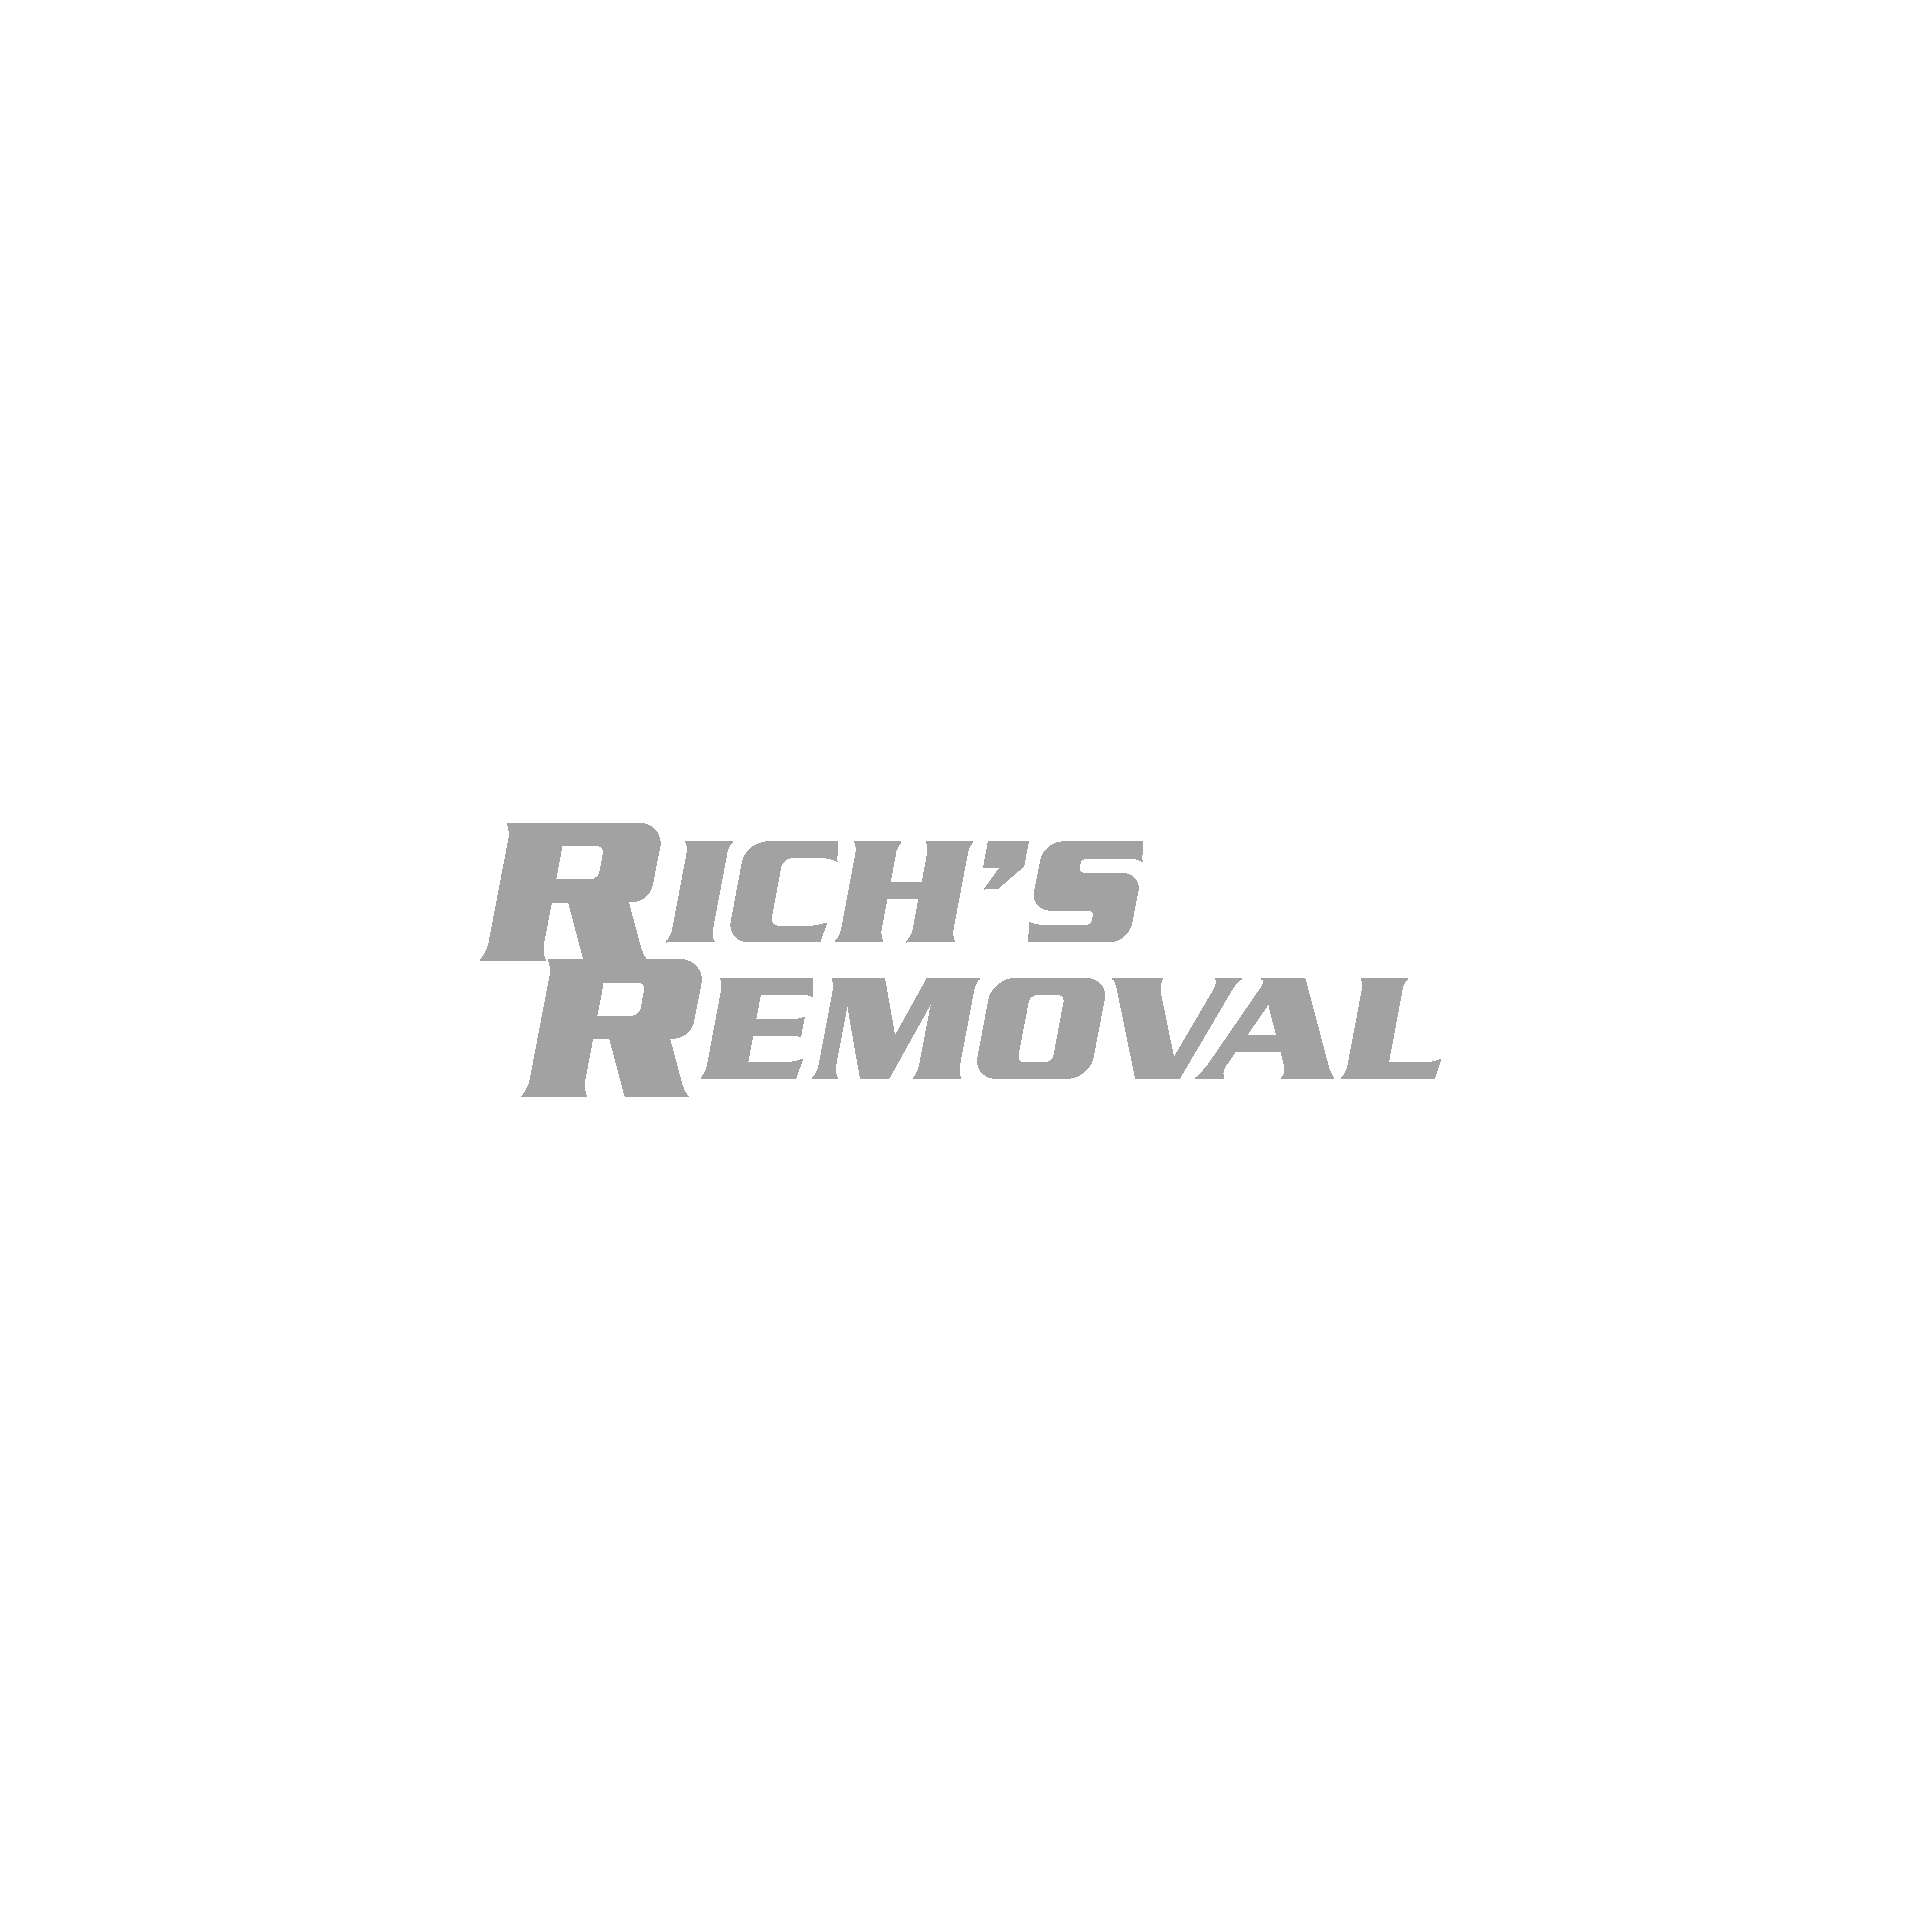 rich's removal logo